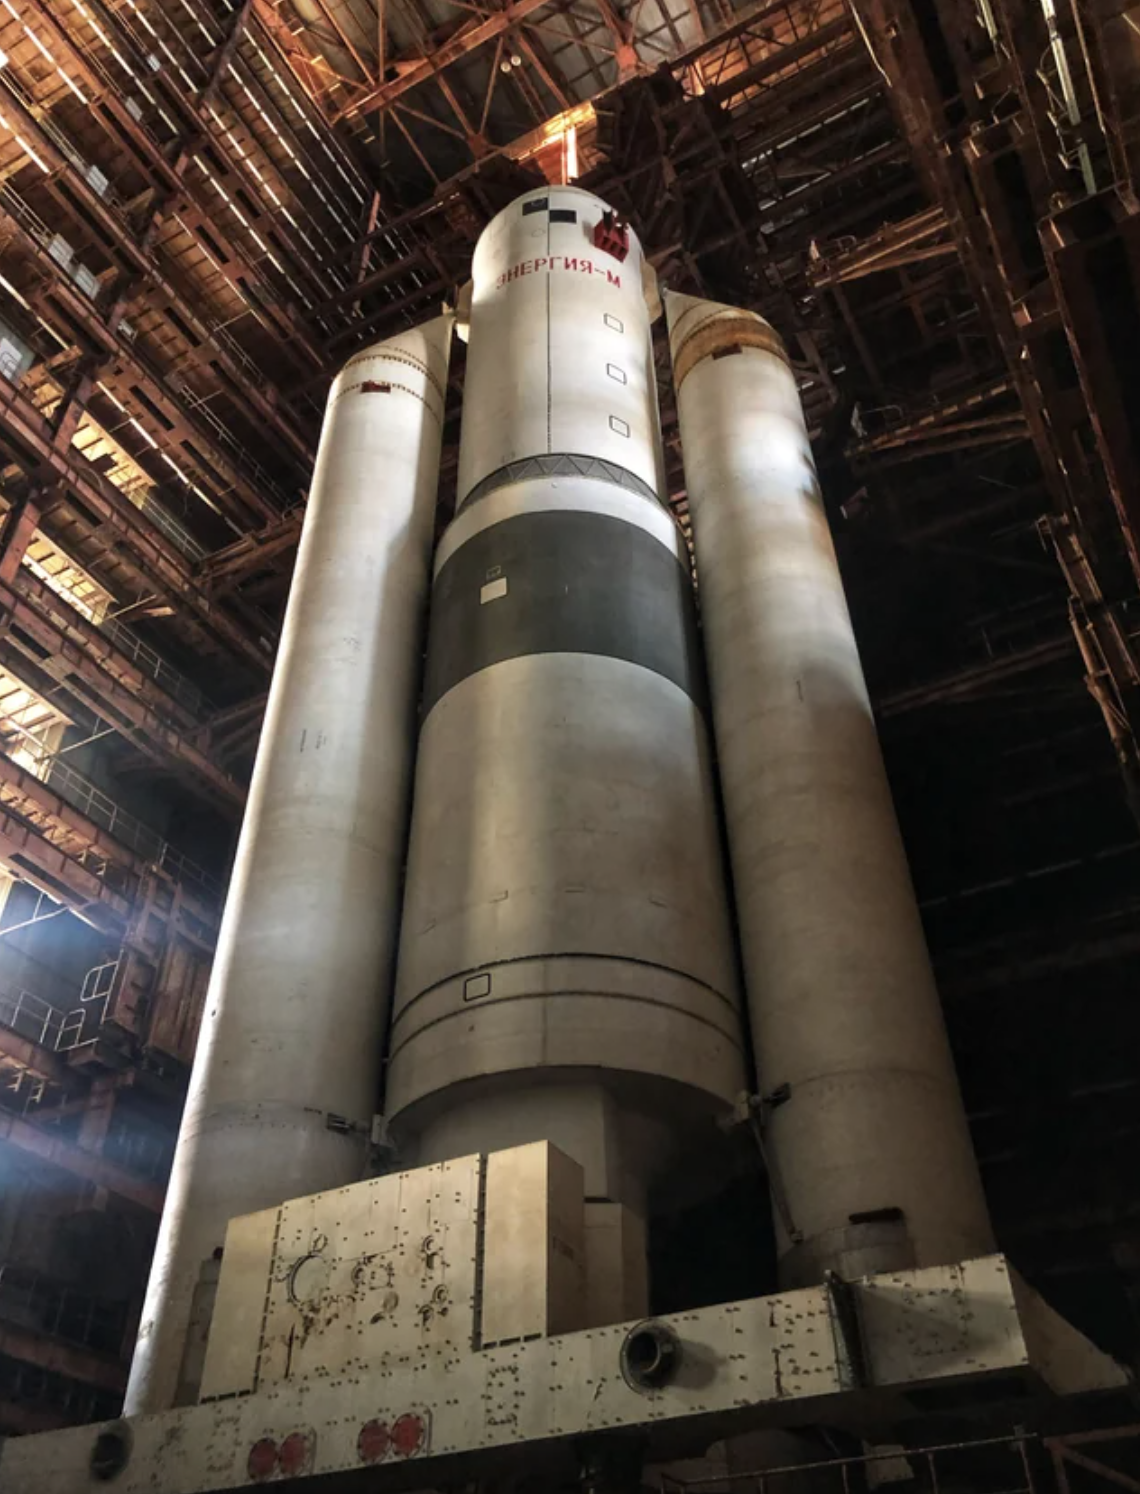 An abandoned rocket